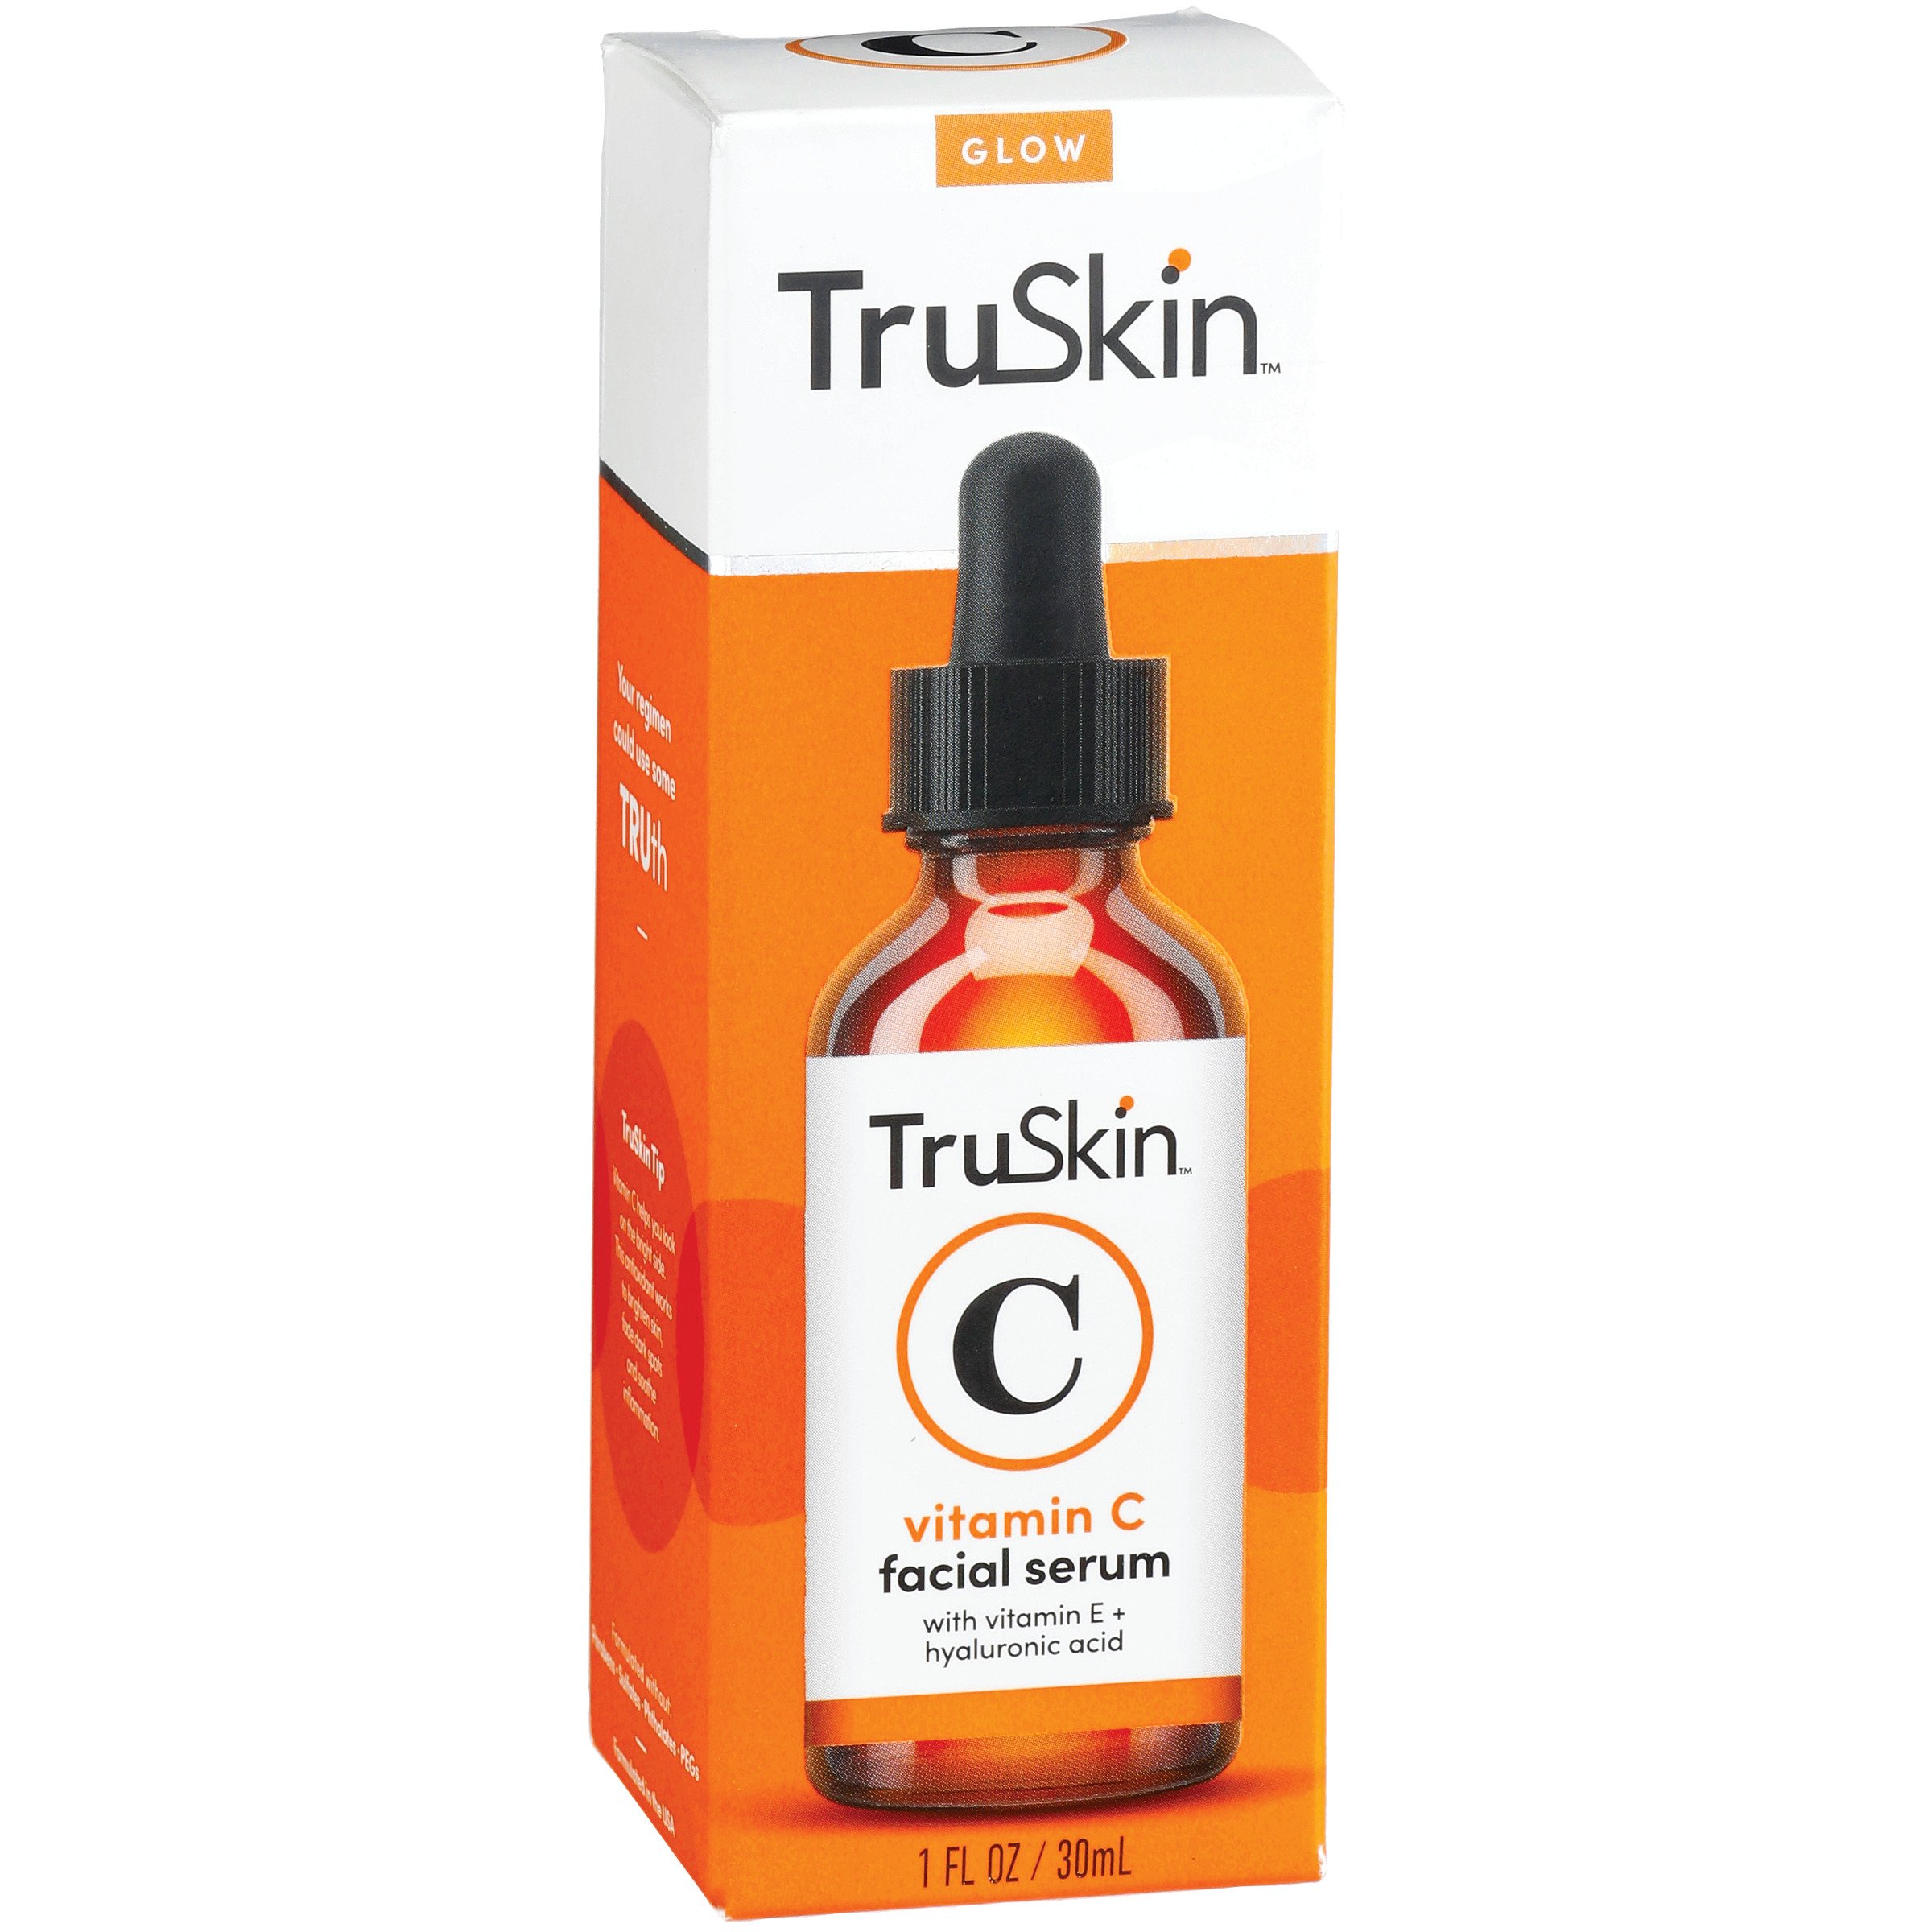 TruSkin Vitamin C Facial Serum - Shop Facial & Treatments at H-E-B